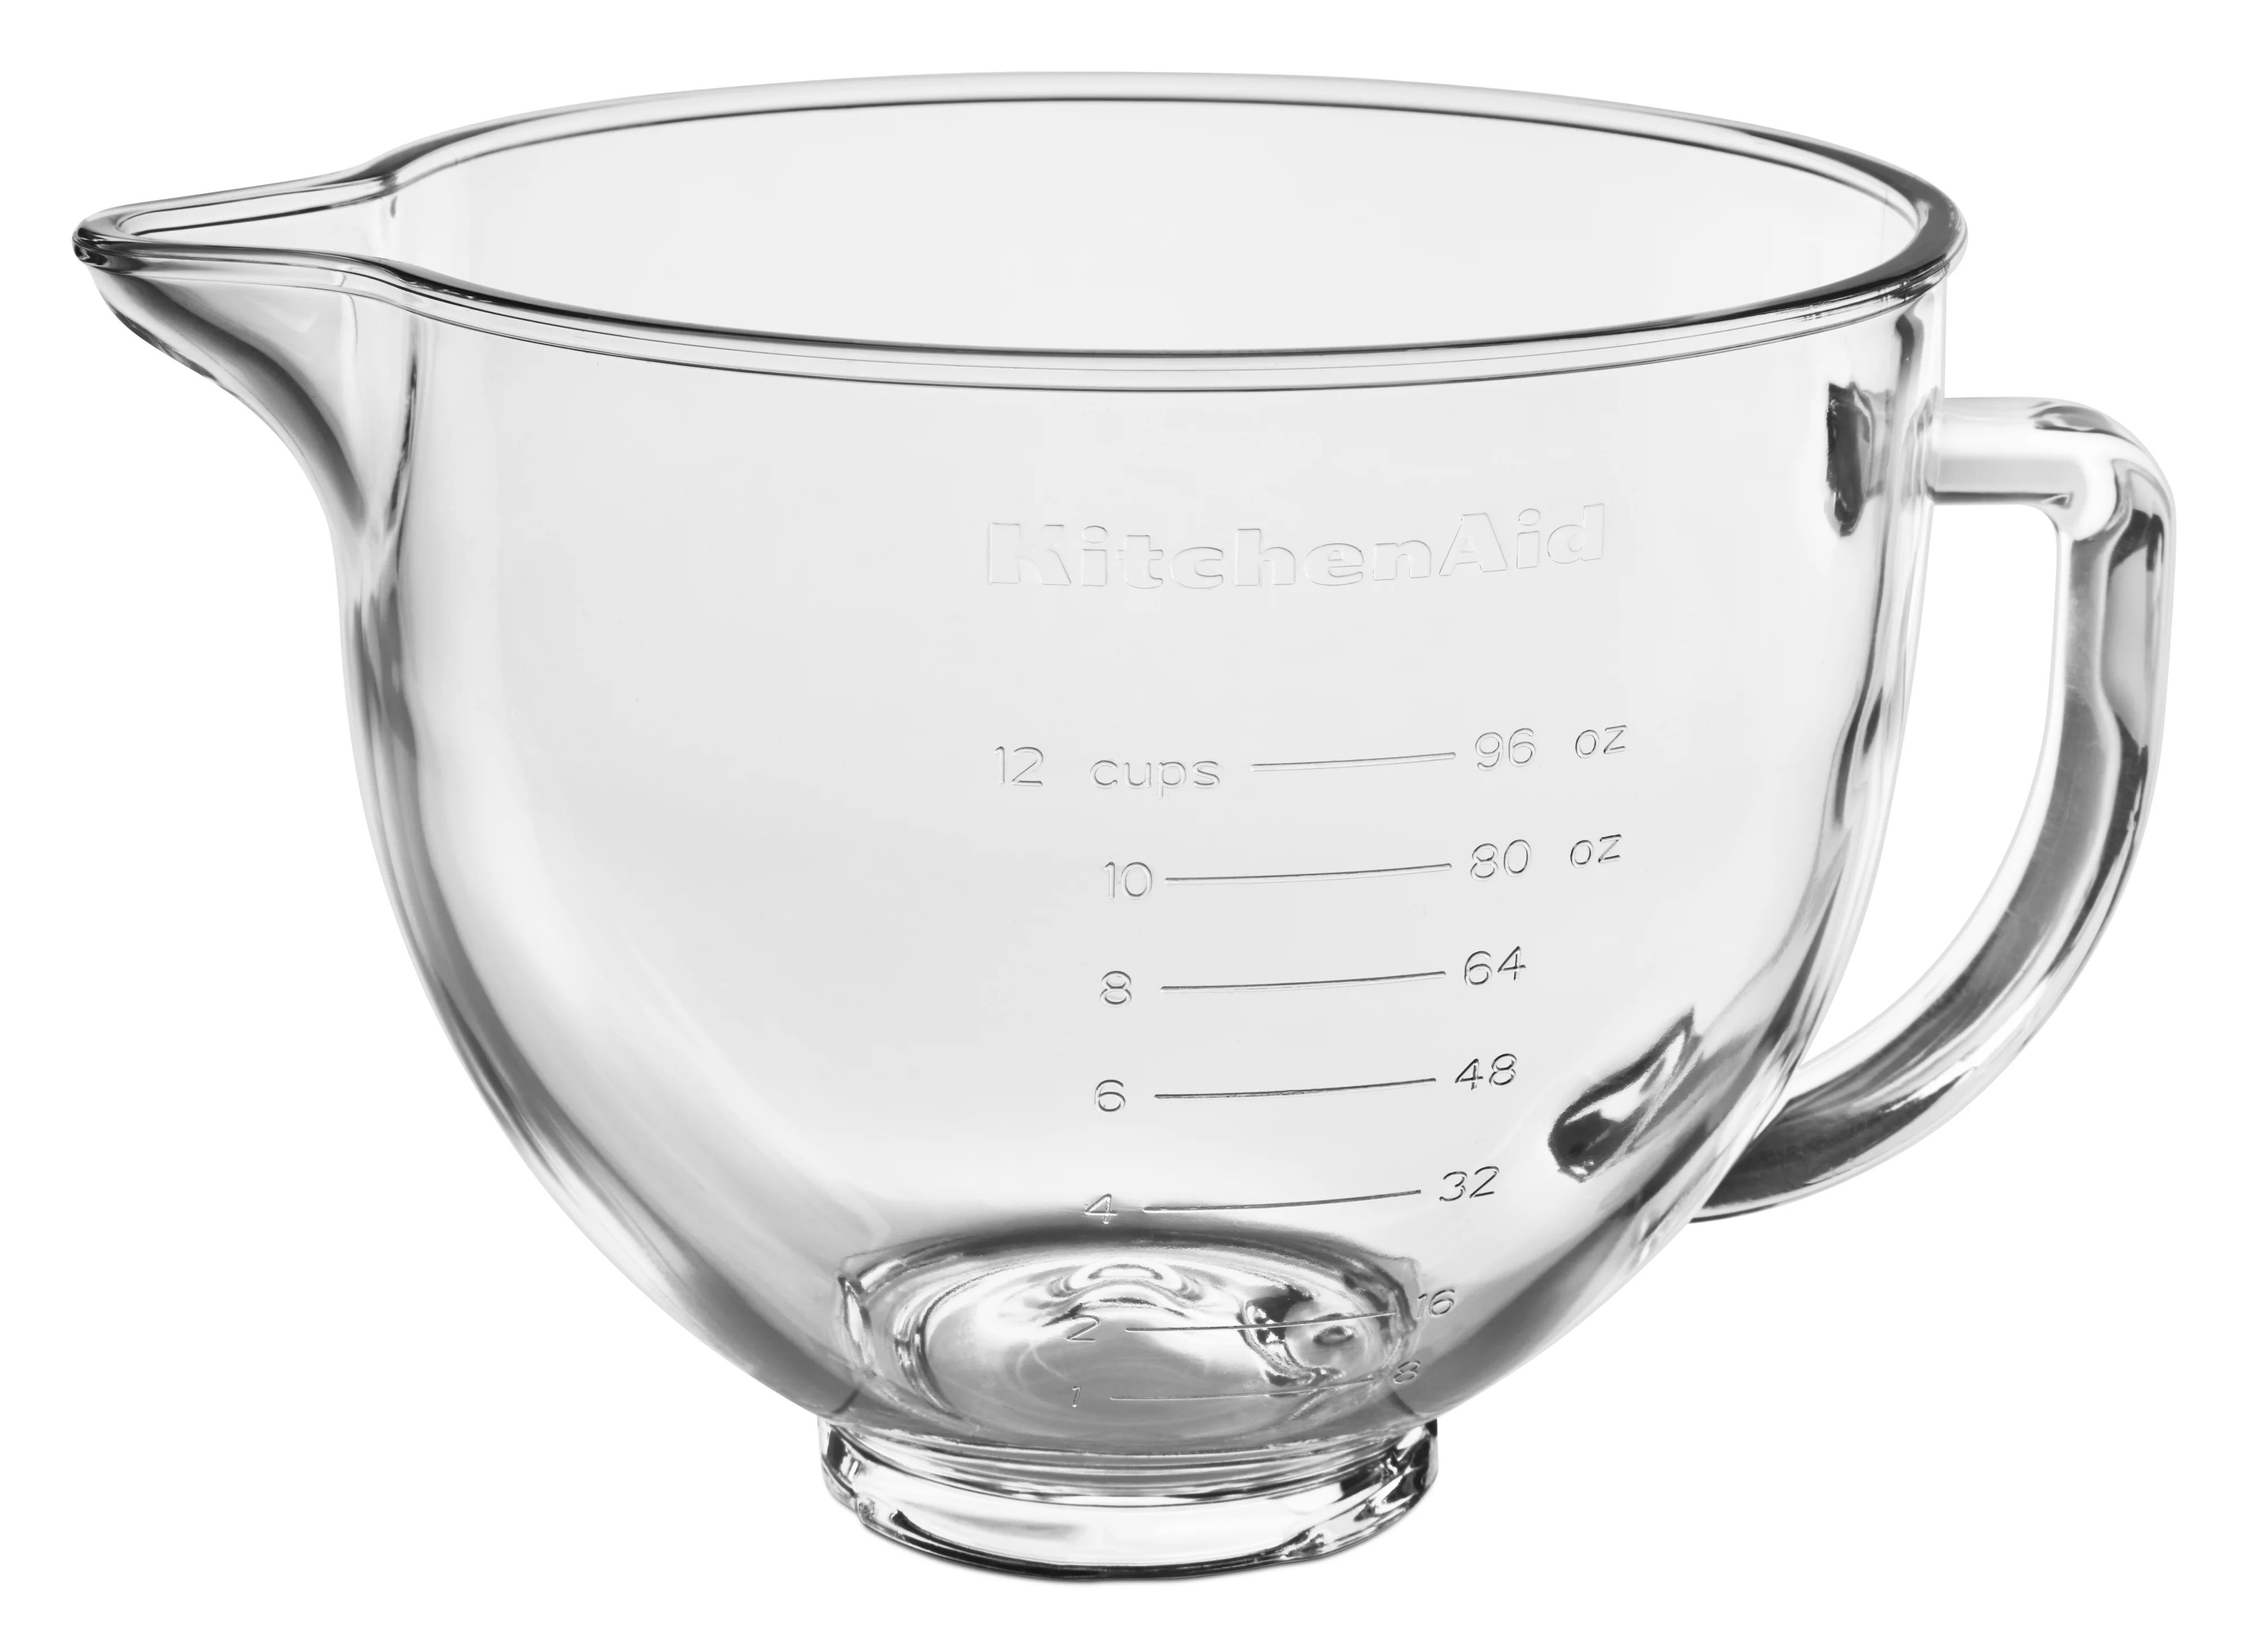 KitchenAid 5 Quart Tilt-Head Glass Bowl with Measurement Markings - KSM5NLGB | Walmart (US)